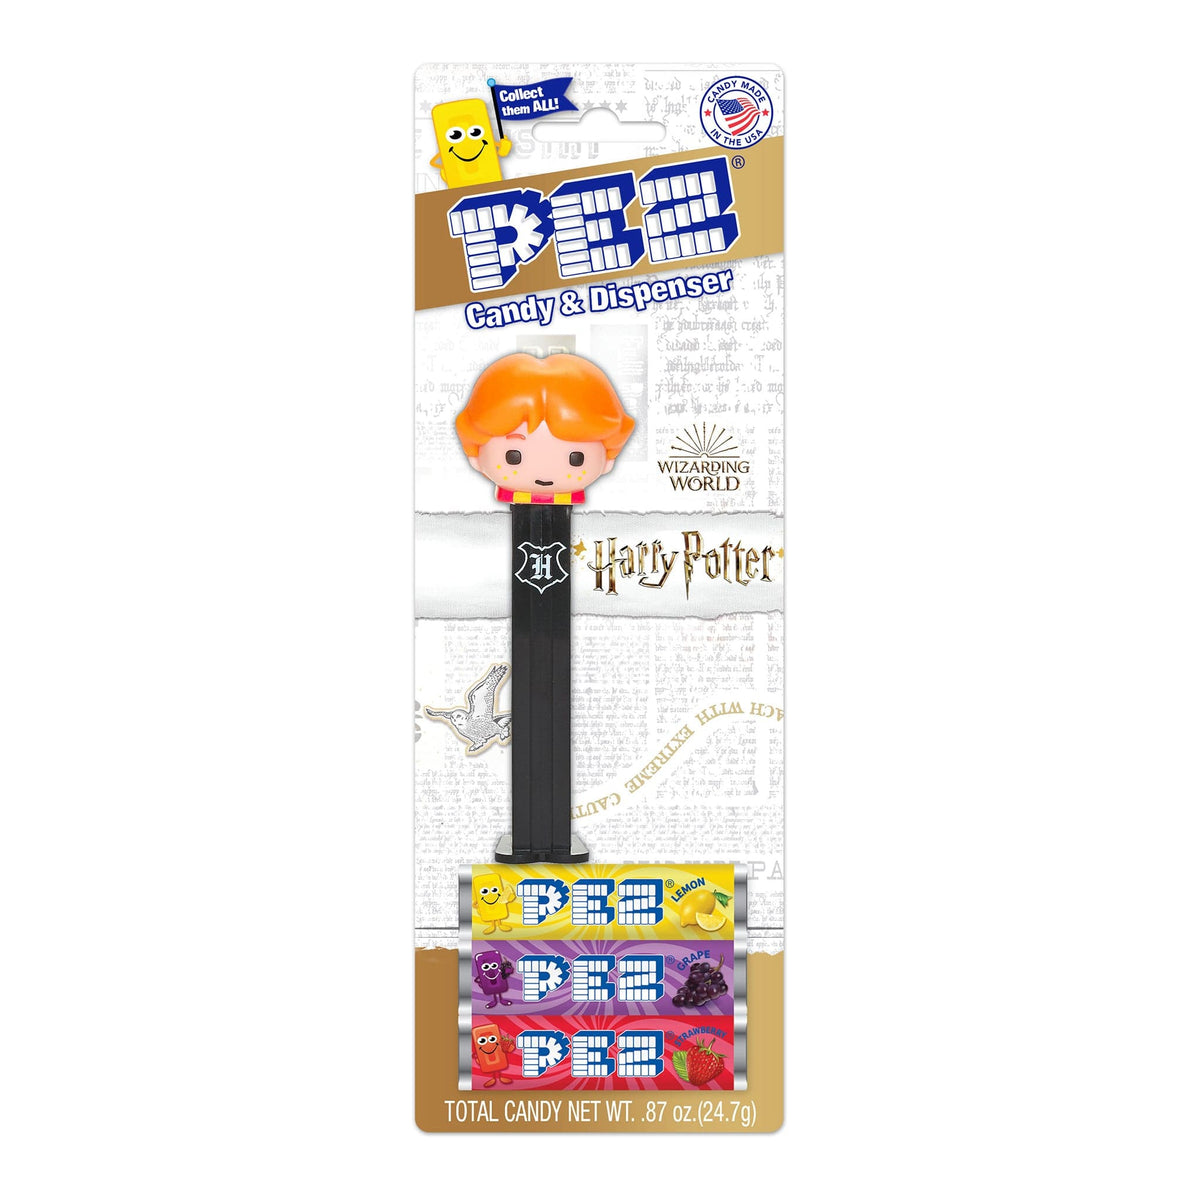 Lolli and Pops Novelty Harry Potter Character PEZ Dispenser